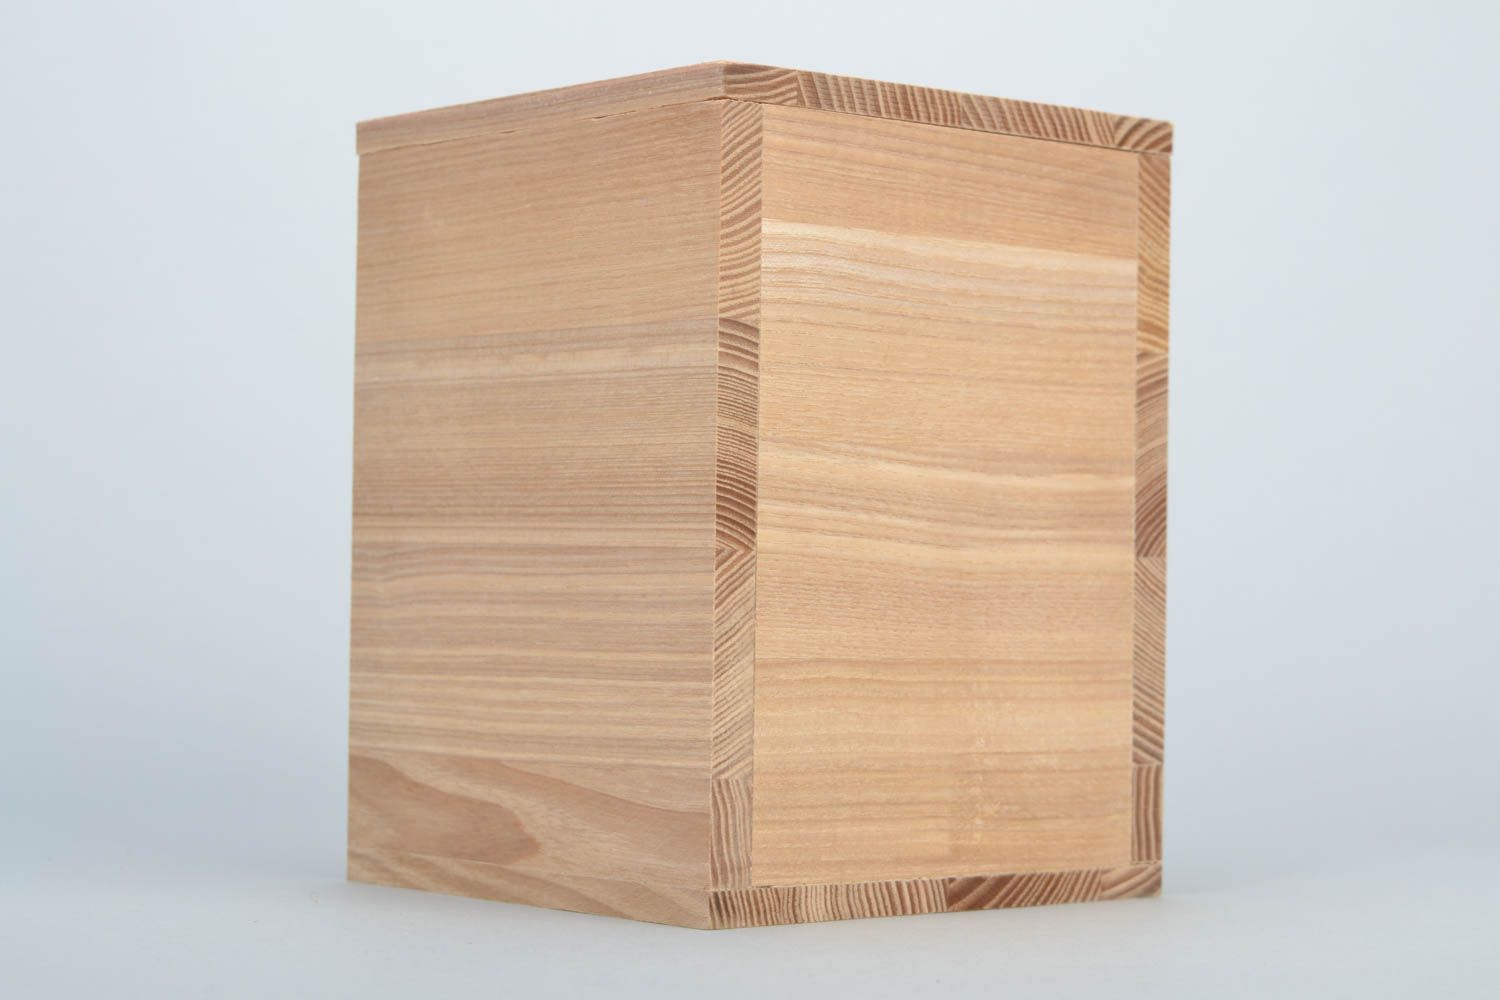 Handmade rectangular ash wood box craft blank for decoupage or painting photo 1